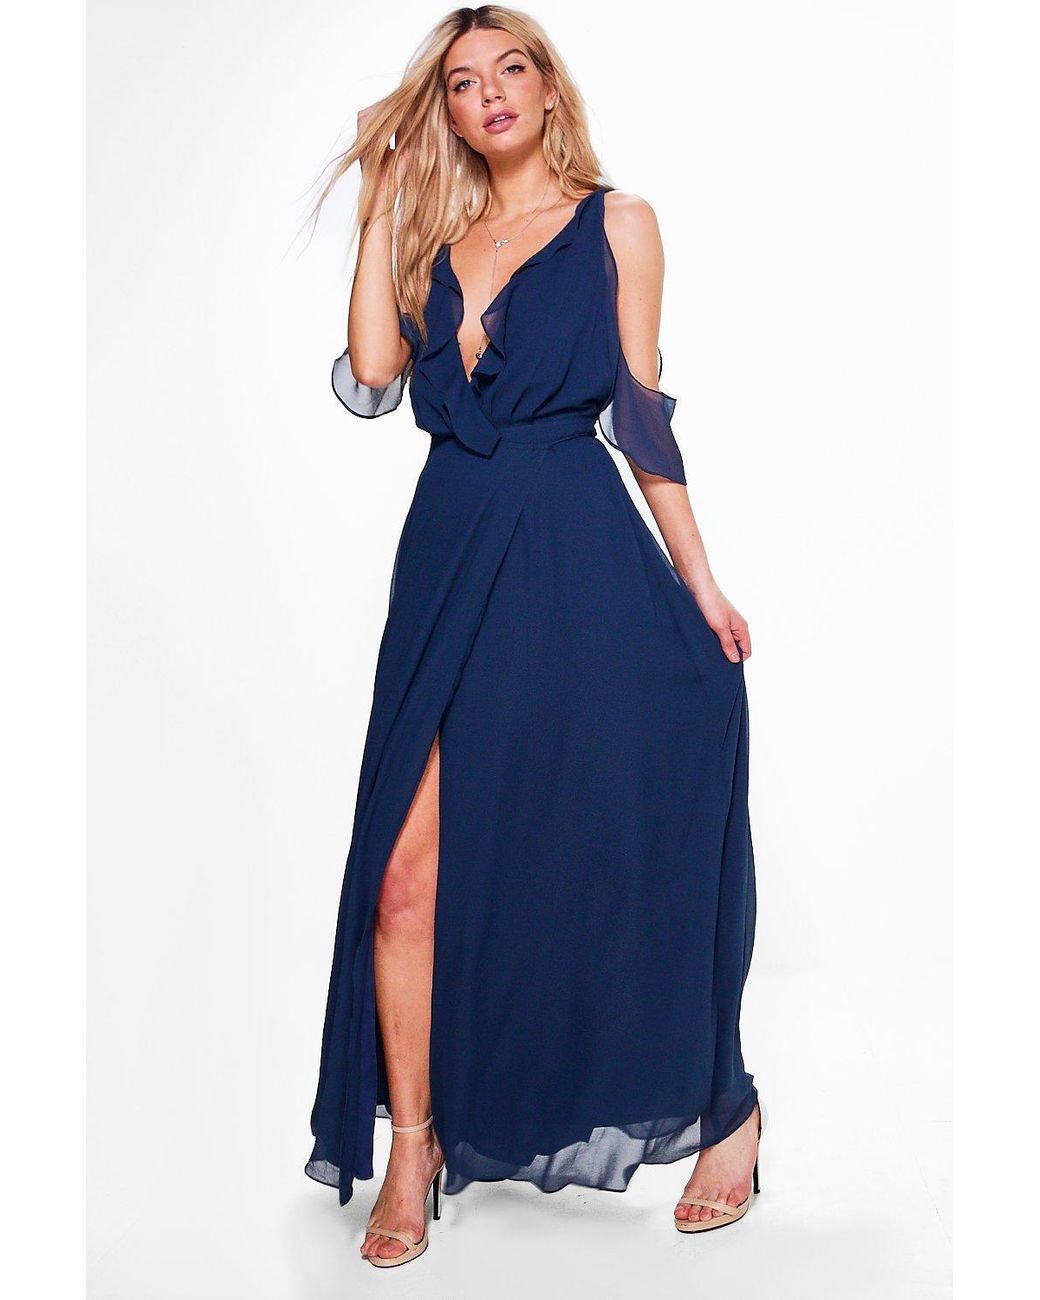 Boohoo Chiffon Frill Wrap Maxi Bridesmaid Dress in Navy (Blue) - Lyst